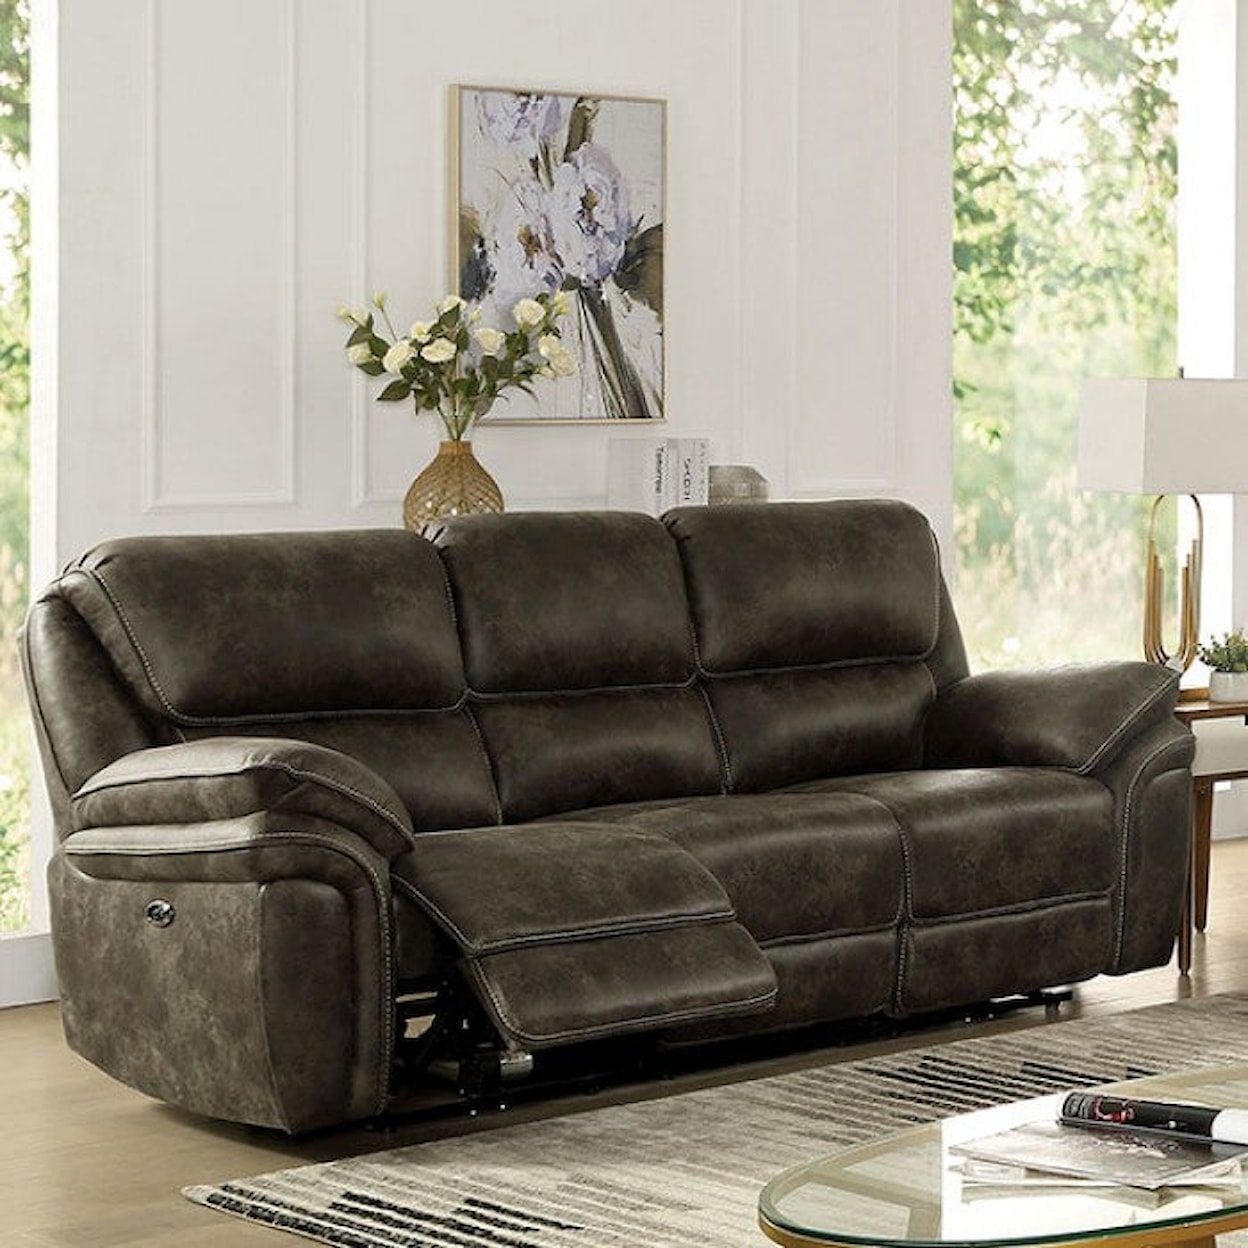 Furniture of America Tredegar Power Sofa